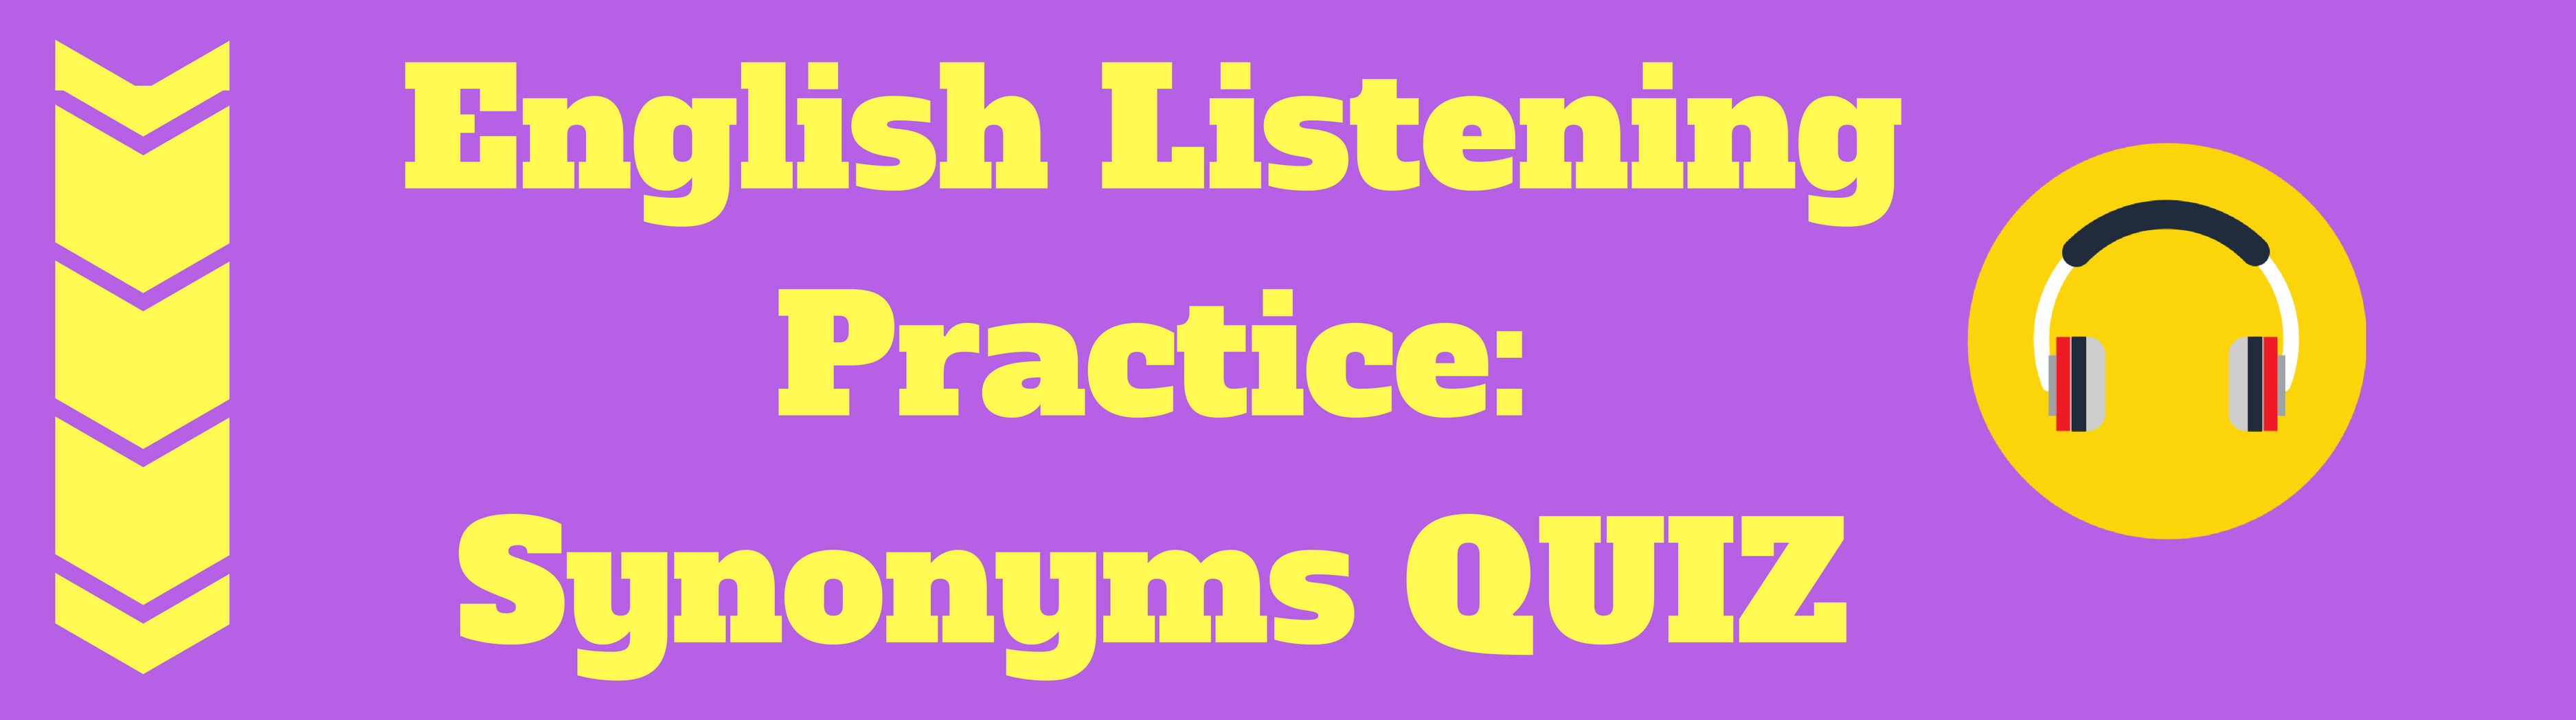 English Listening Practice. English Practice. English Exam. English Practice net Sport Listening. Practice english com